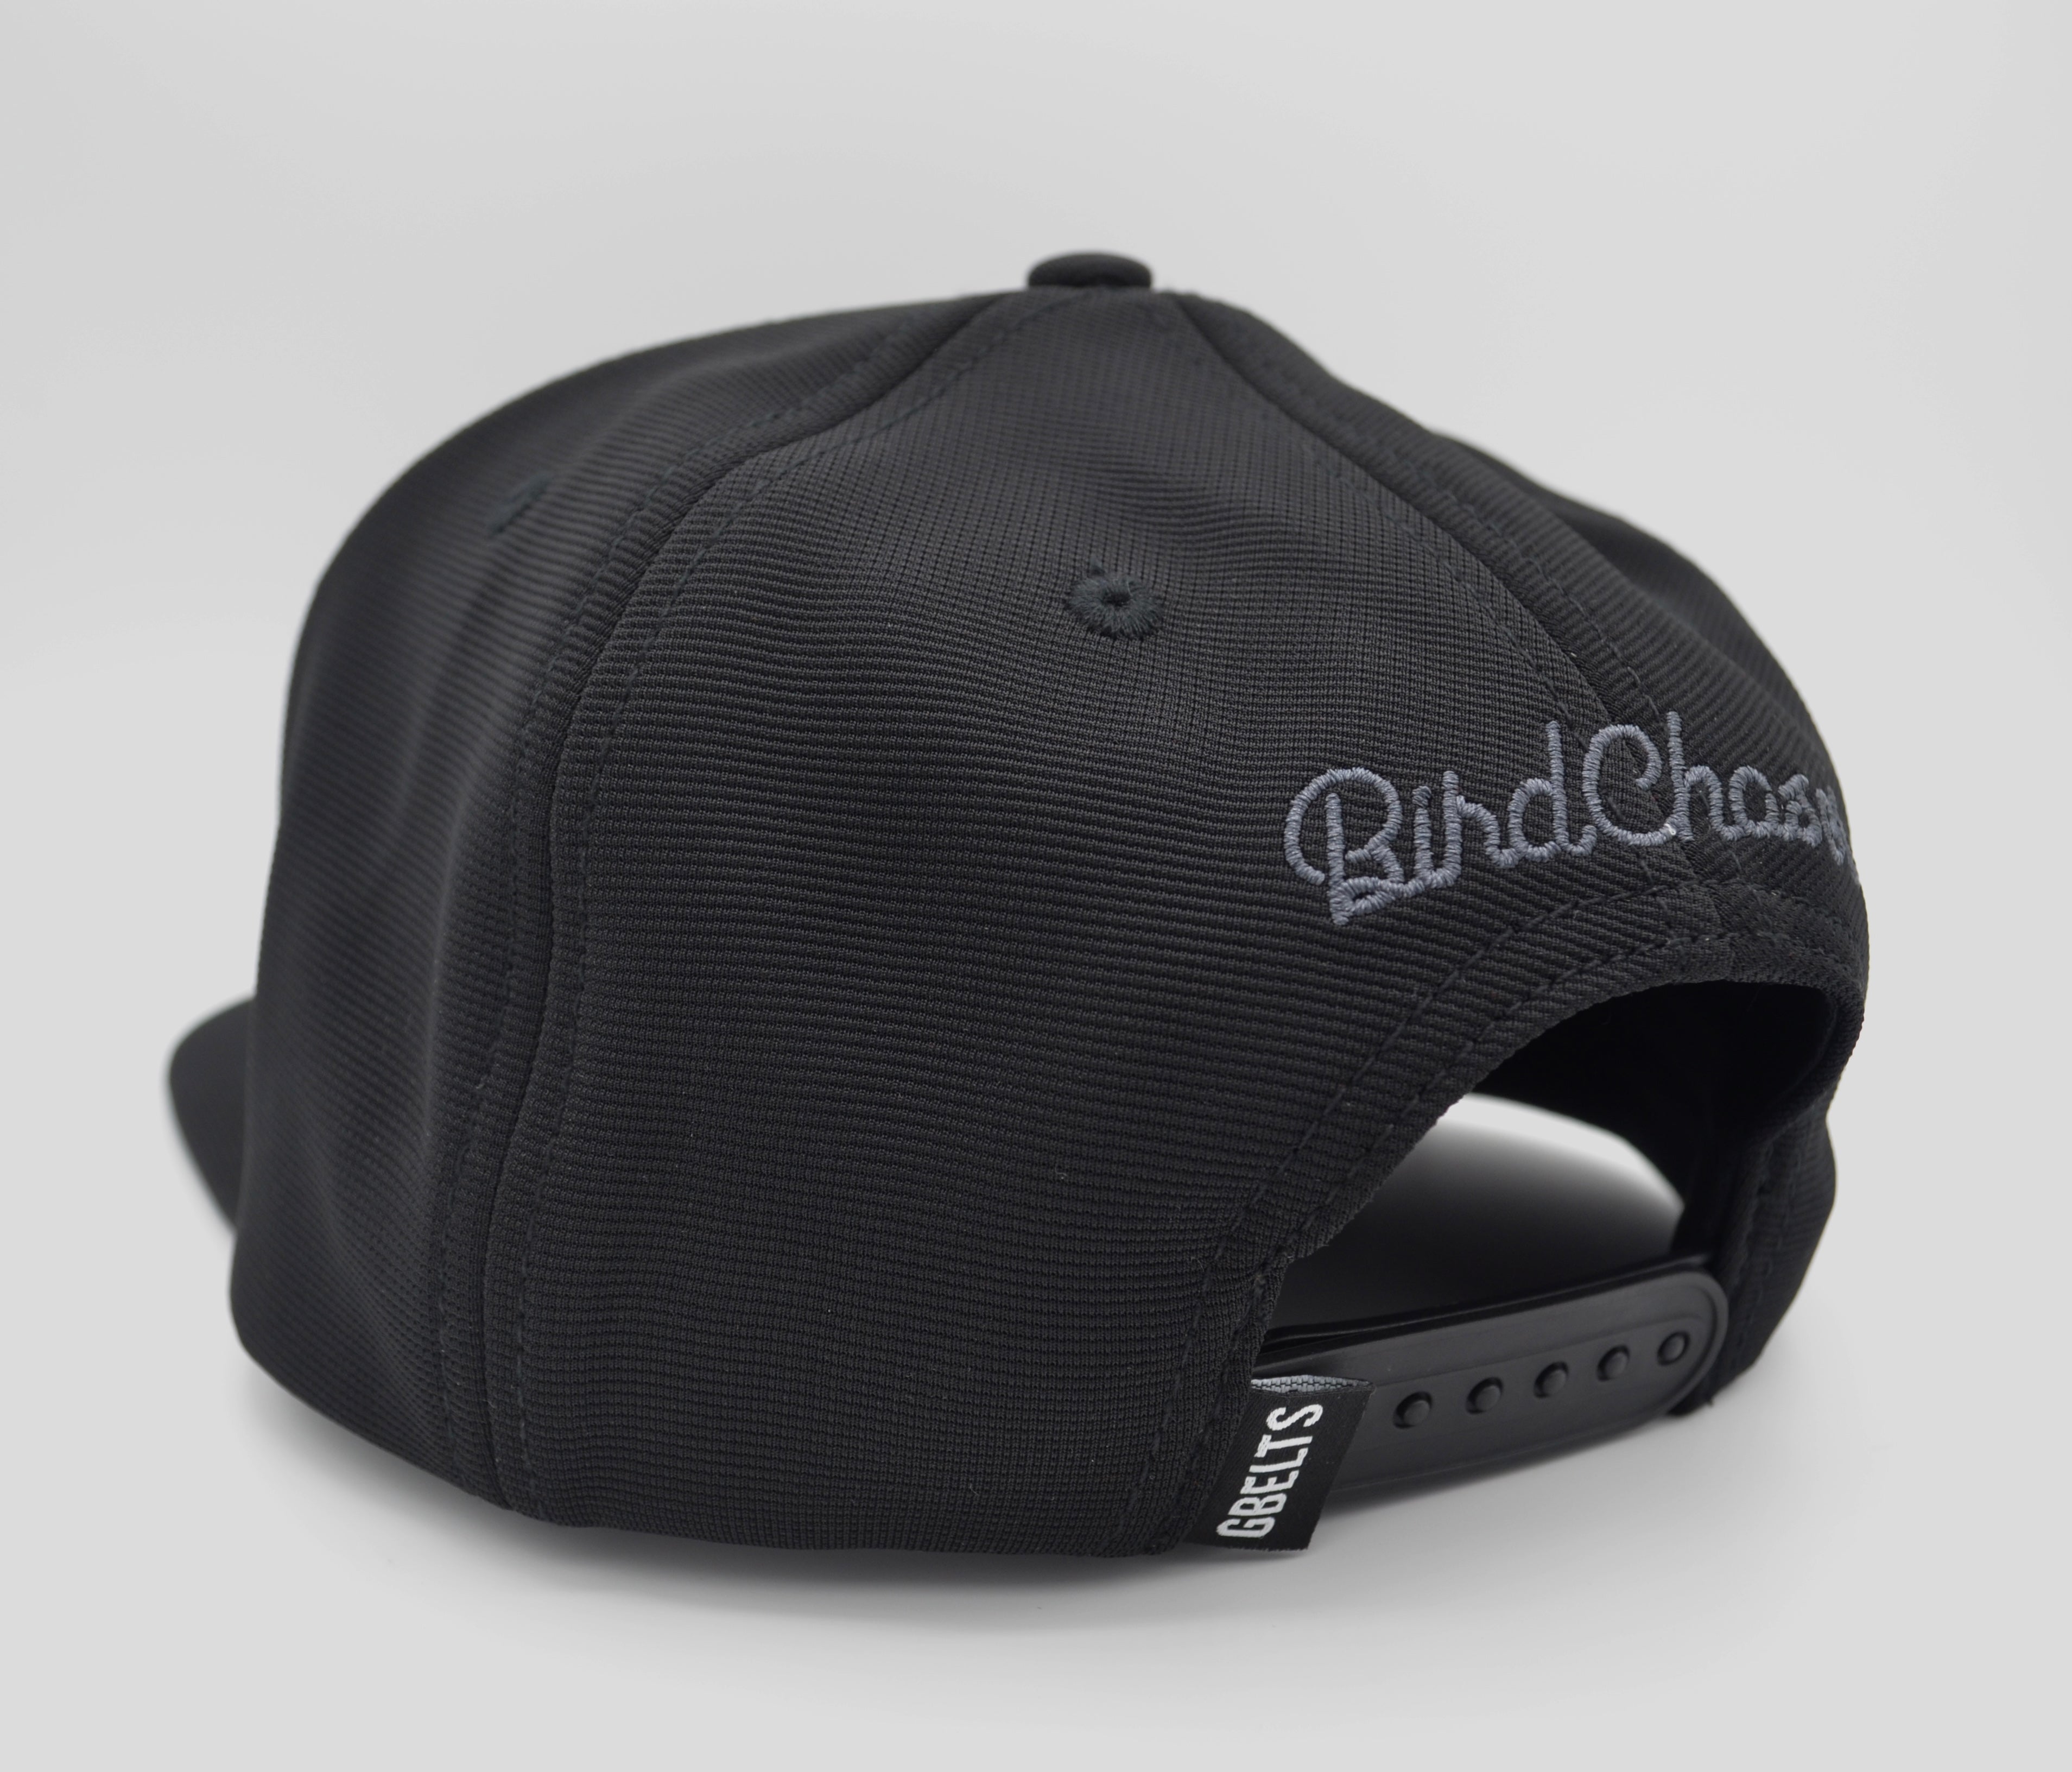 BirdChaser Premium Black Snapback